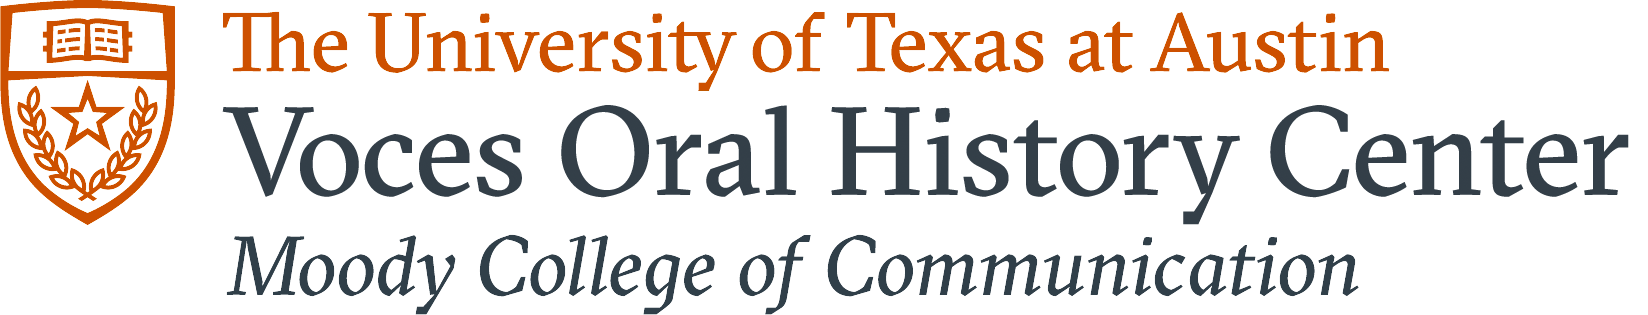 Voces Oral History Center logo